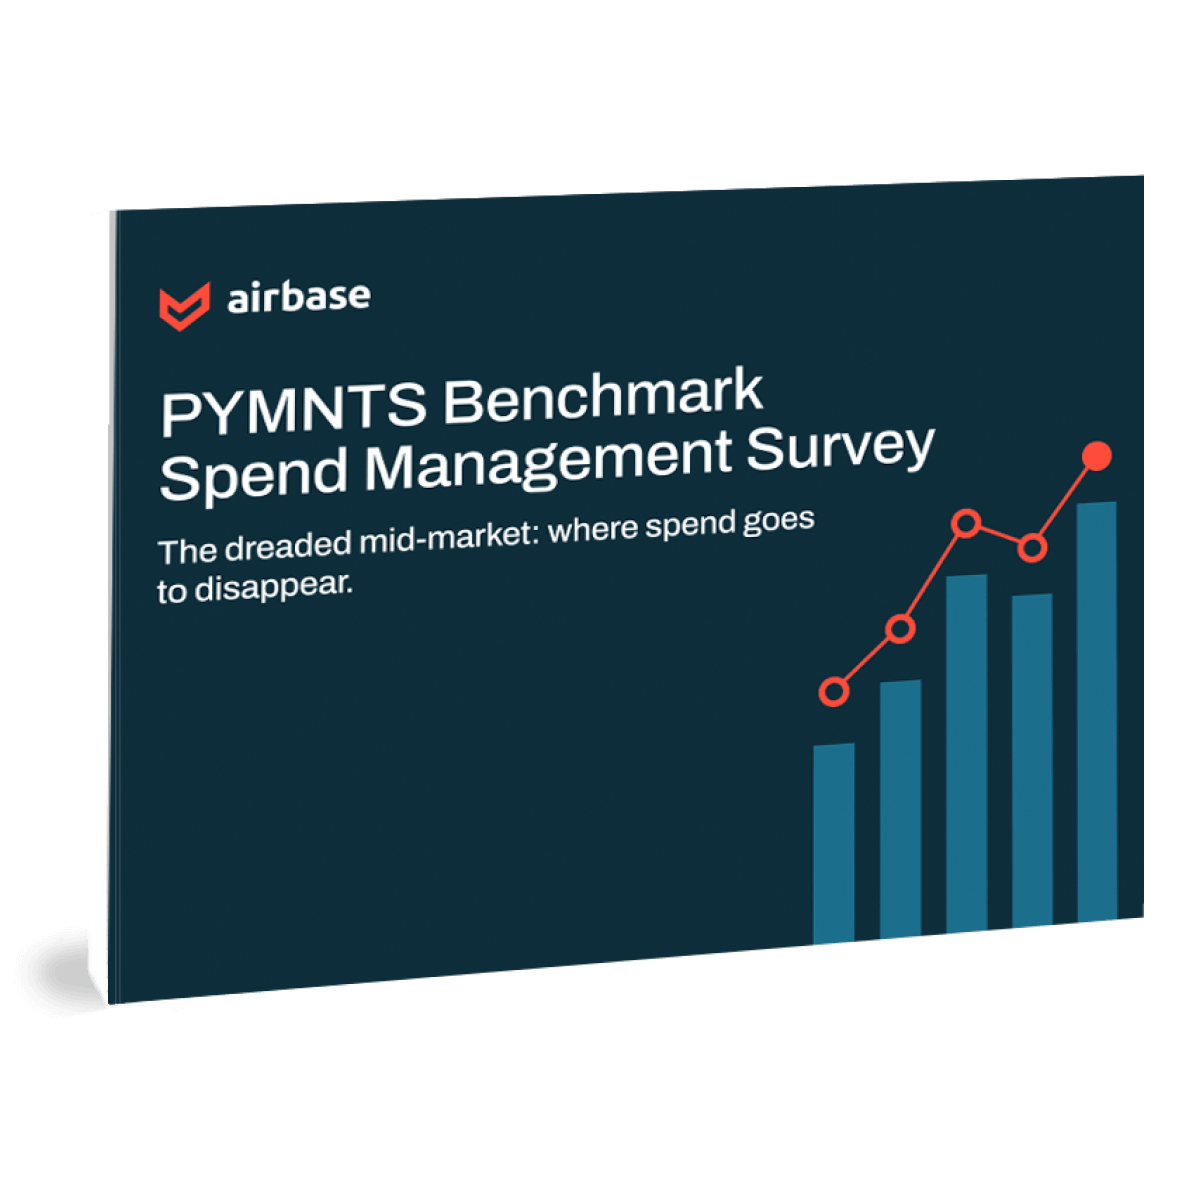 PYMNTS Benchmark Spend Management Survey